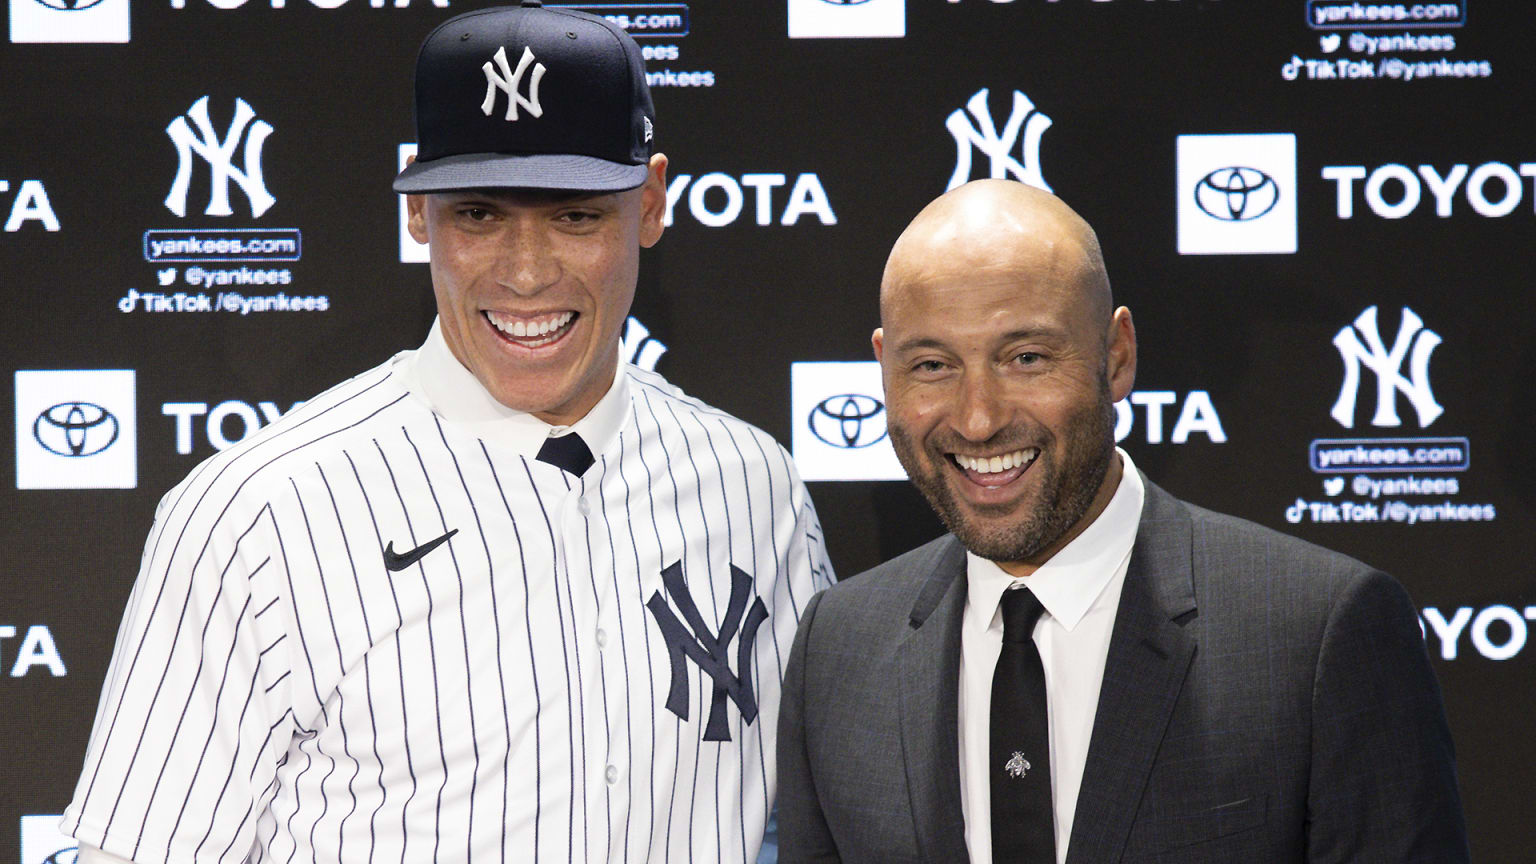 Aaron Judge in a Yankees cap and jersey smiles alongside Derek Jeter, who wears a suit